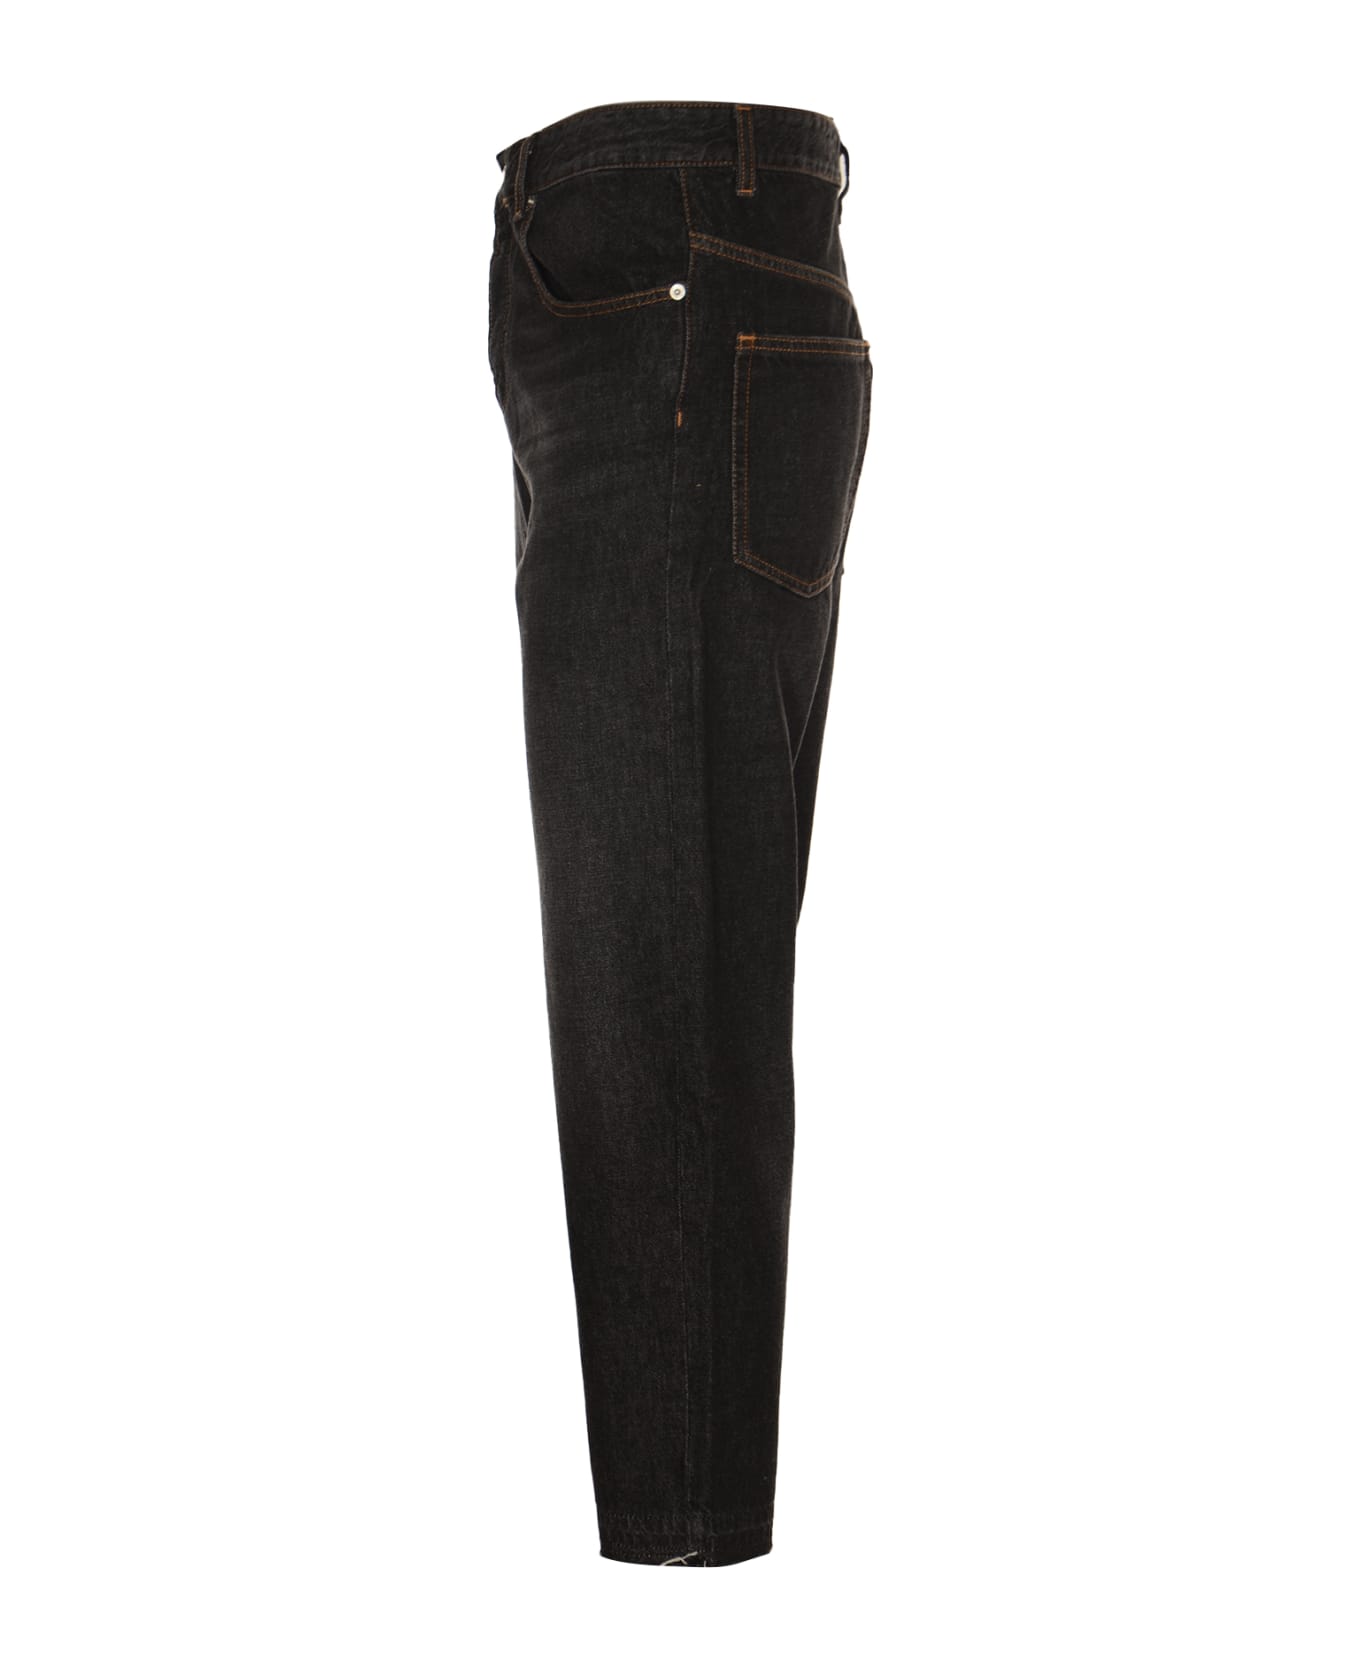 Isabel Marant Jelden Denim Jeans - Faded Black